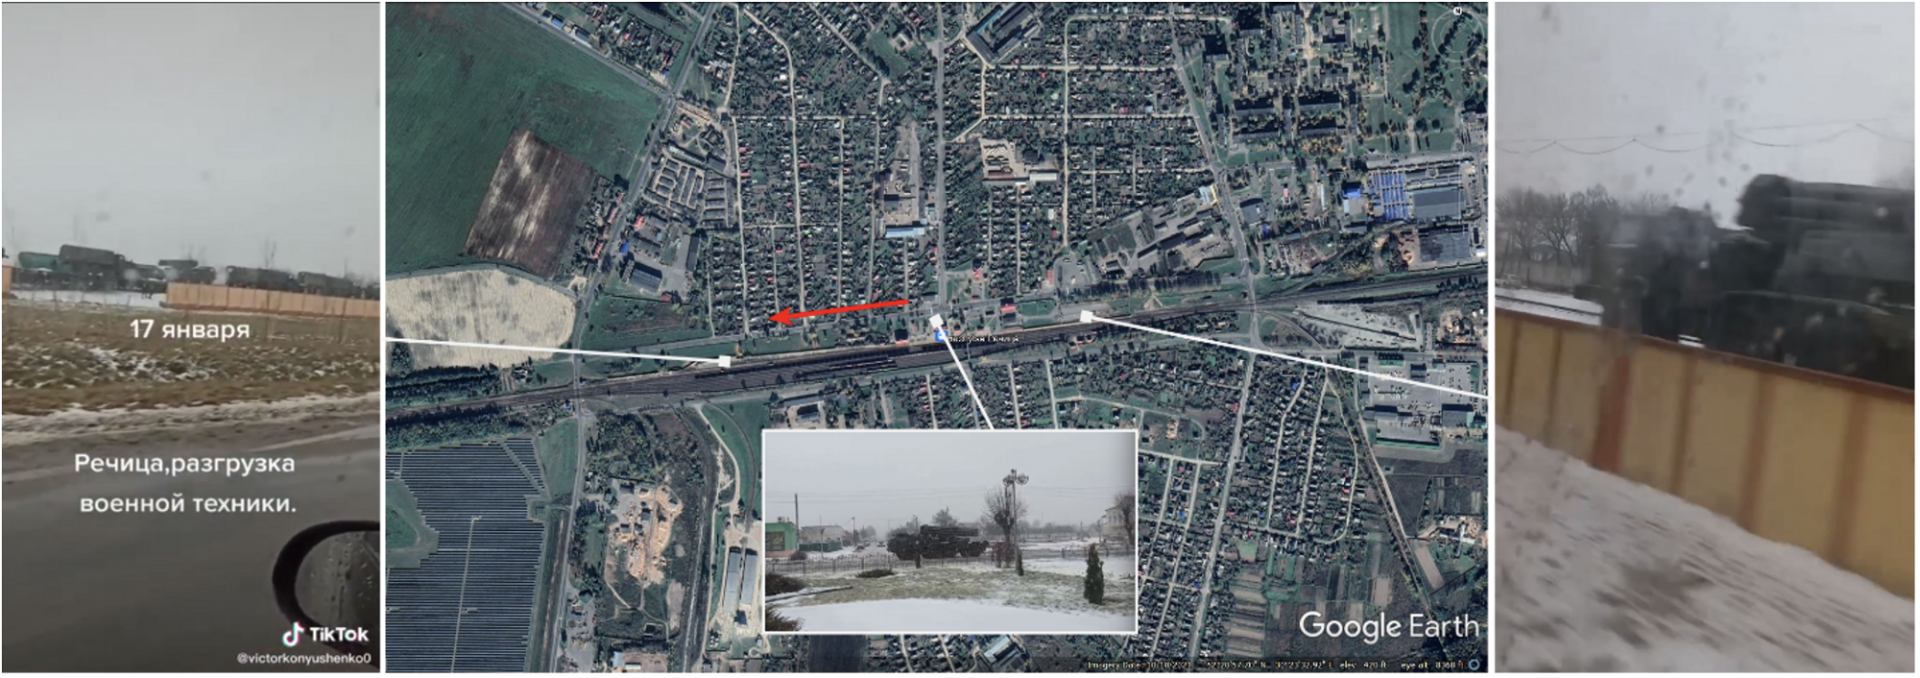 Analysis of footage of Rechitsa station in Belarus on January 17, 2022.